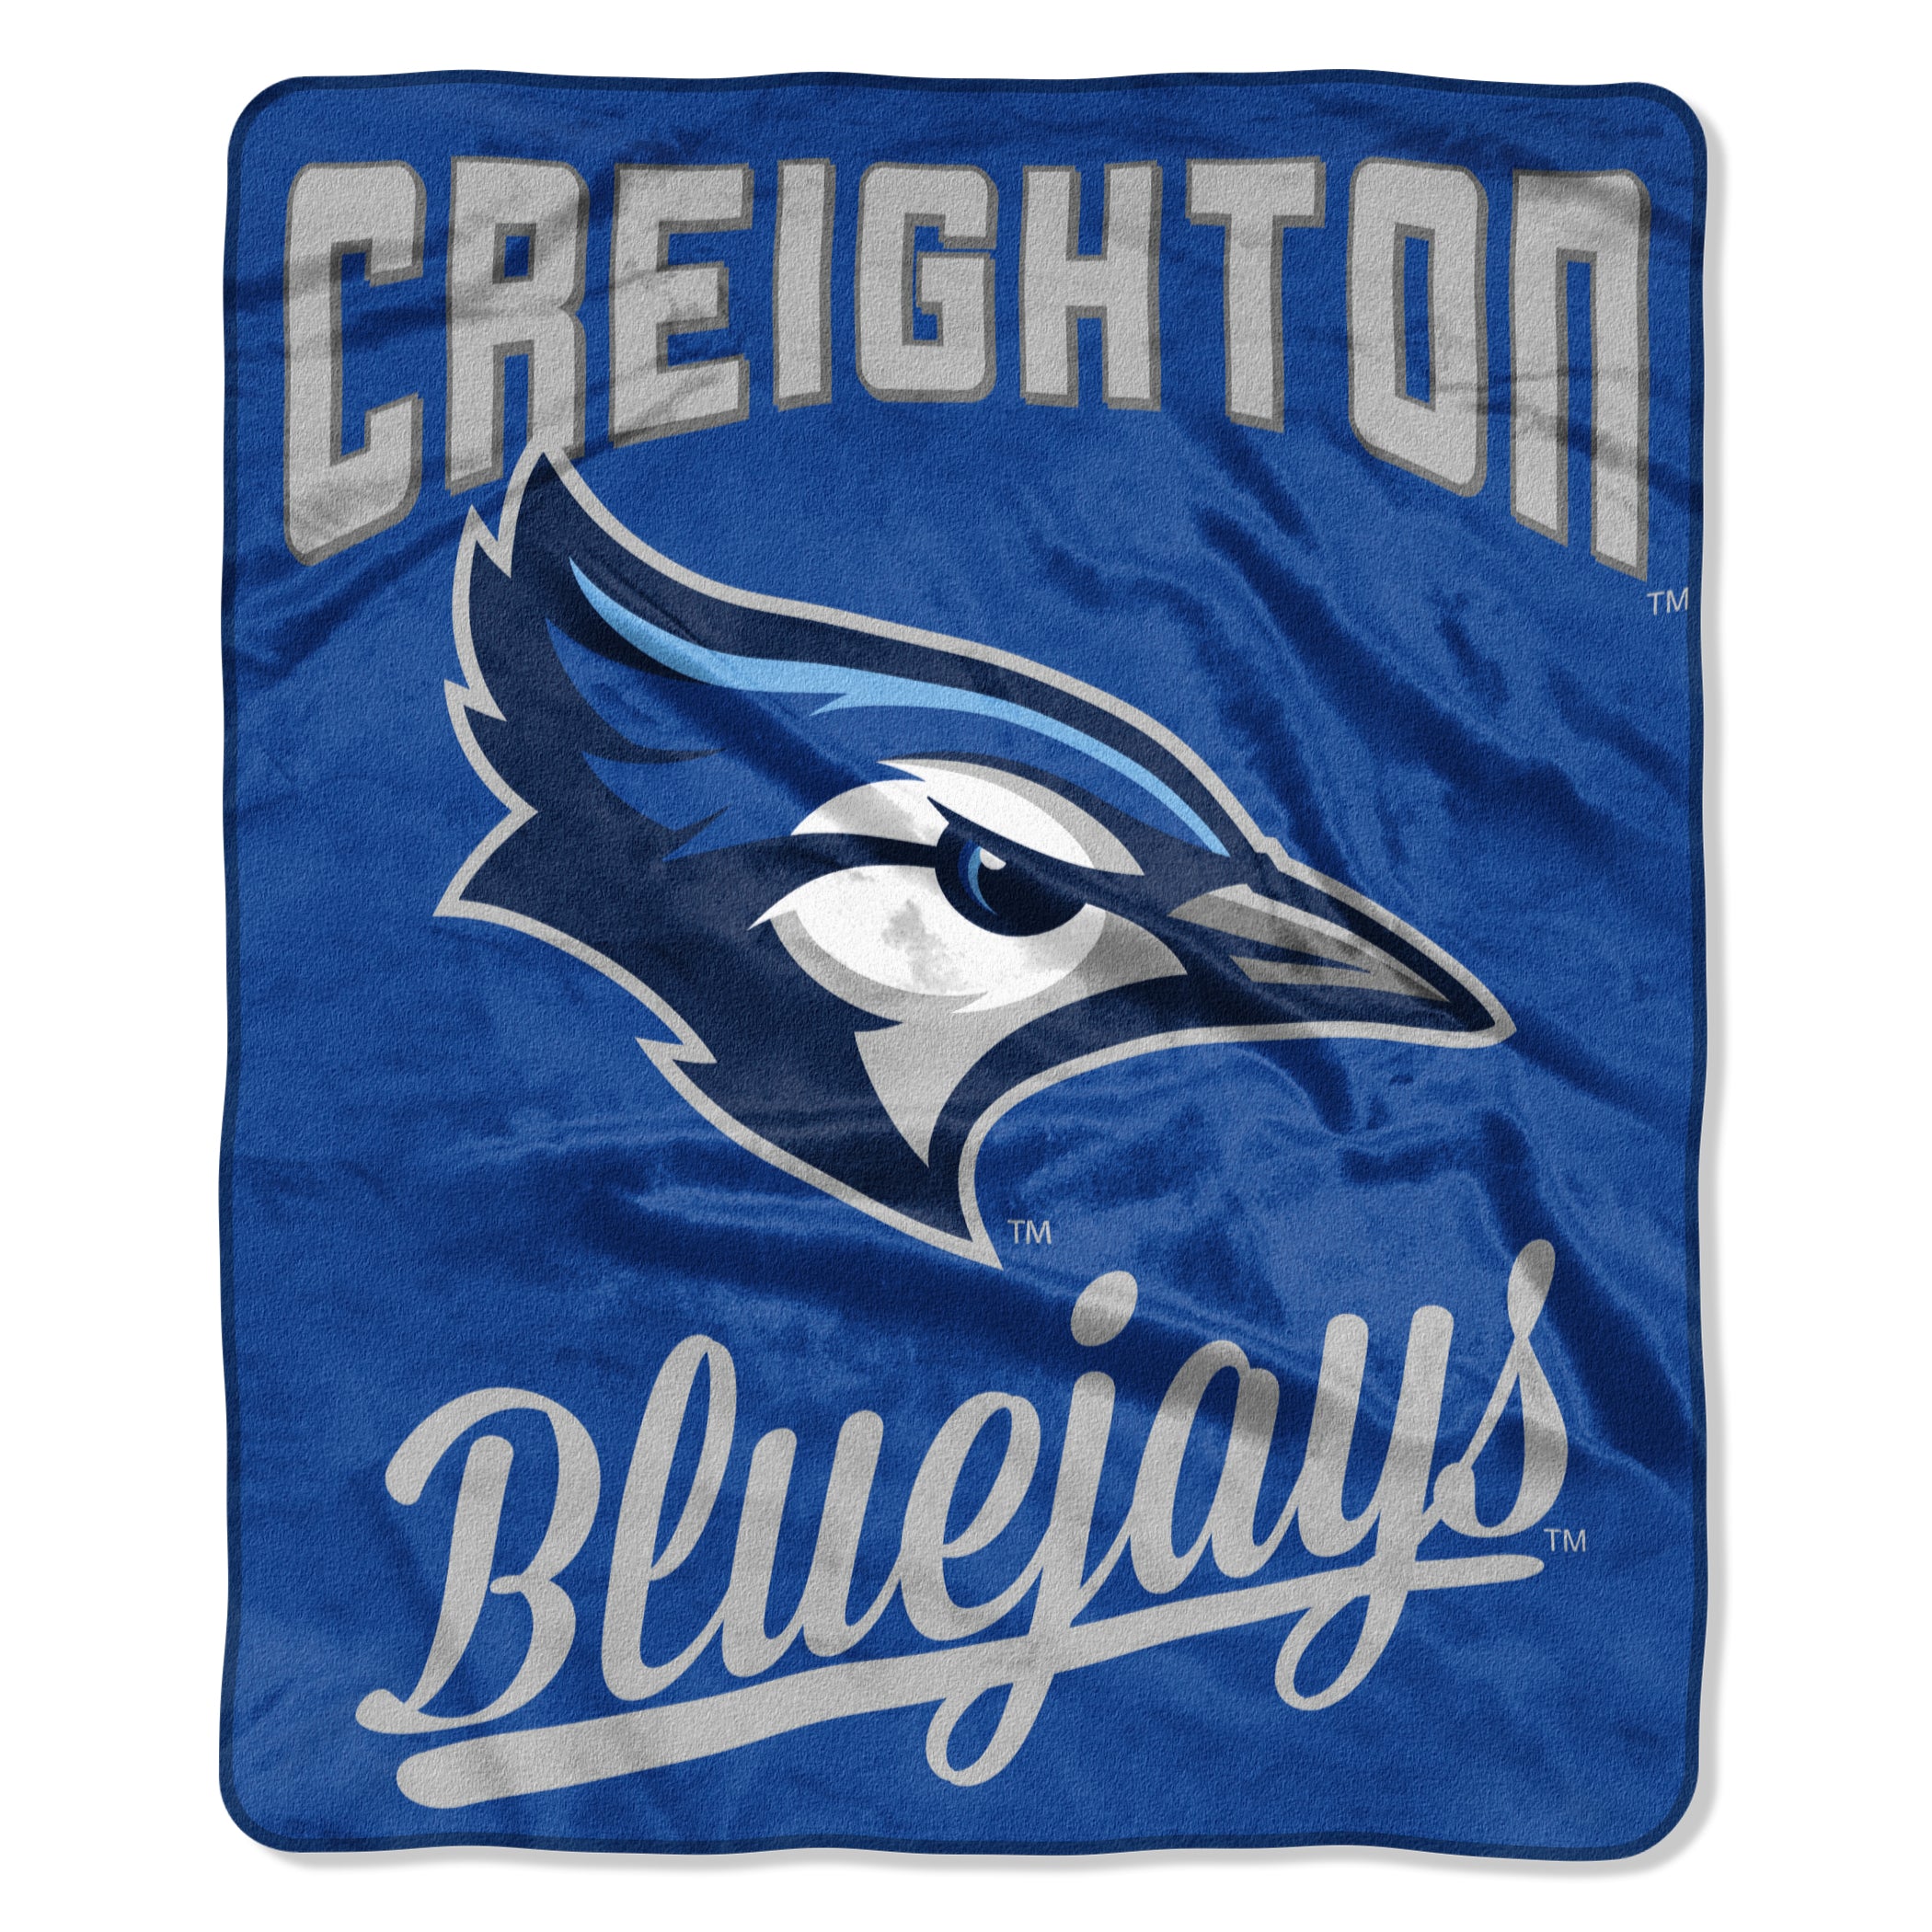 Creighton Bluejays Blanket 50x60 Raschel Alumni Design